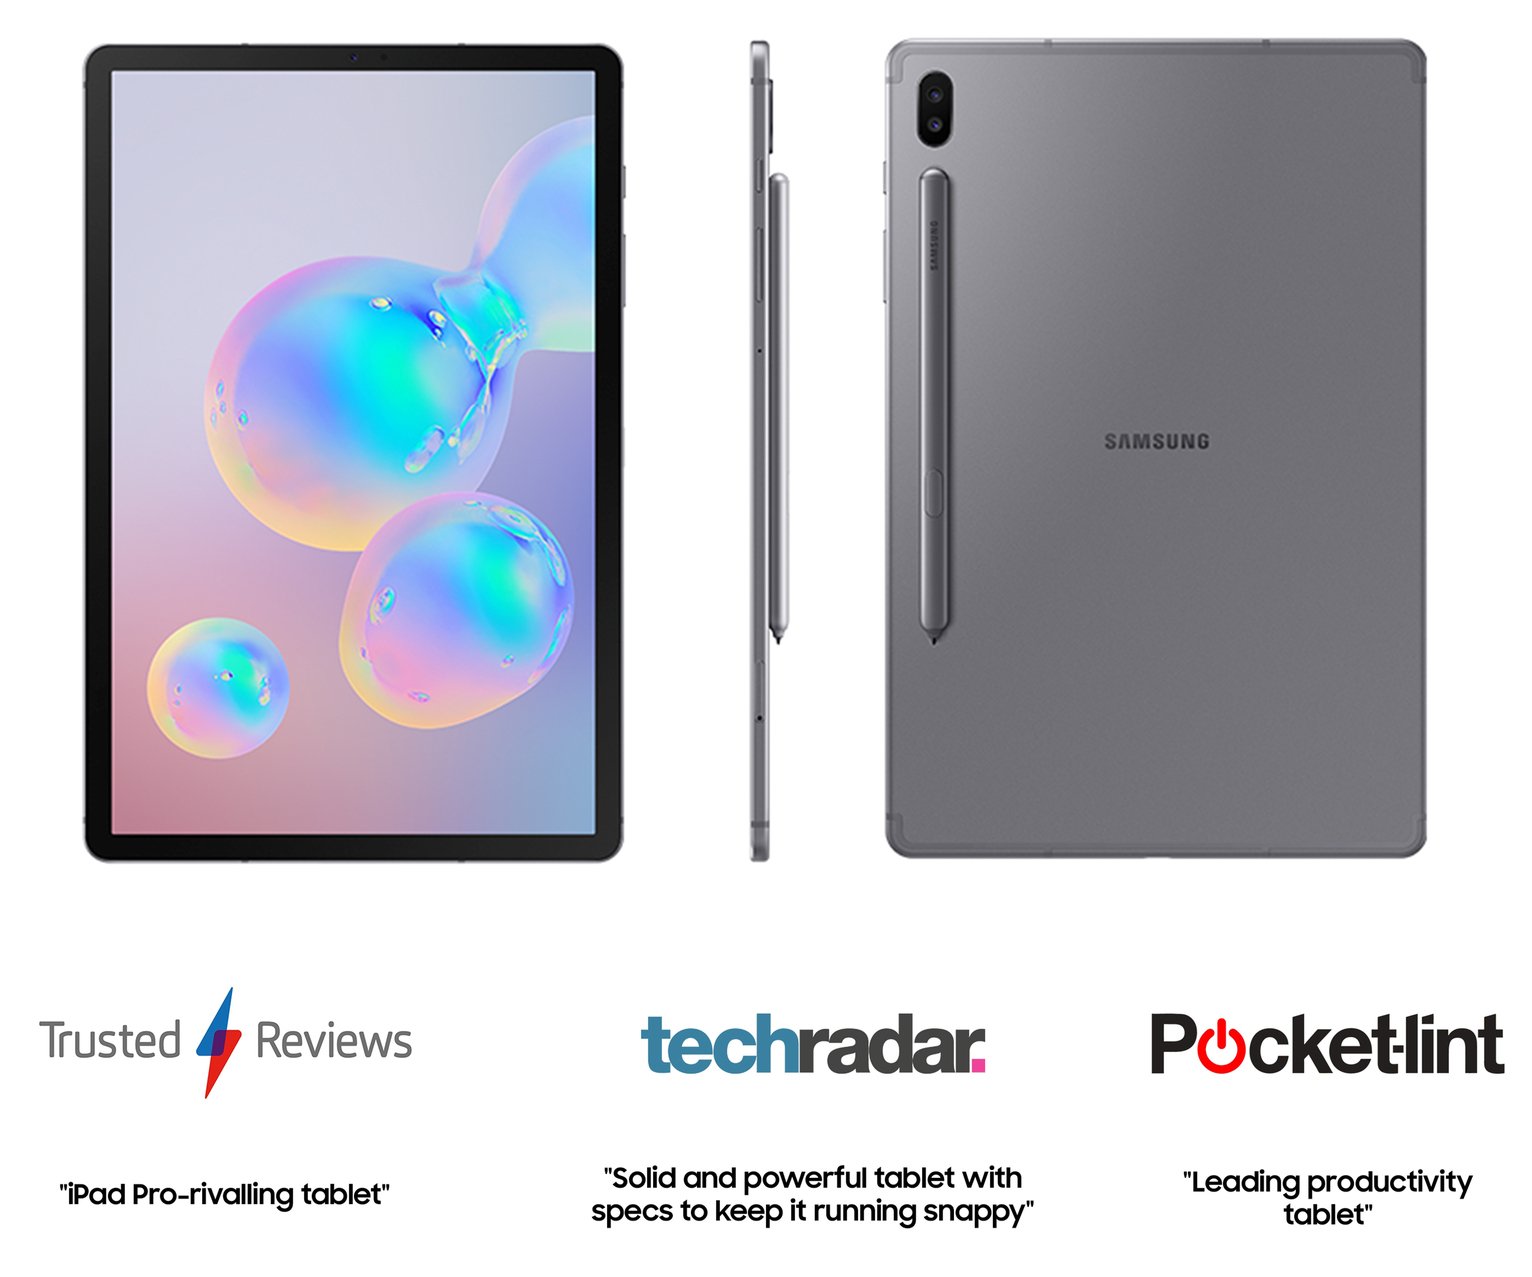 Samsung Galaxy Tab S6 10.5 Inch 256GB Cellular Tablet Review